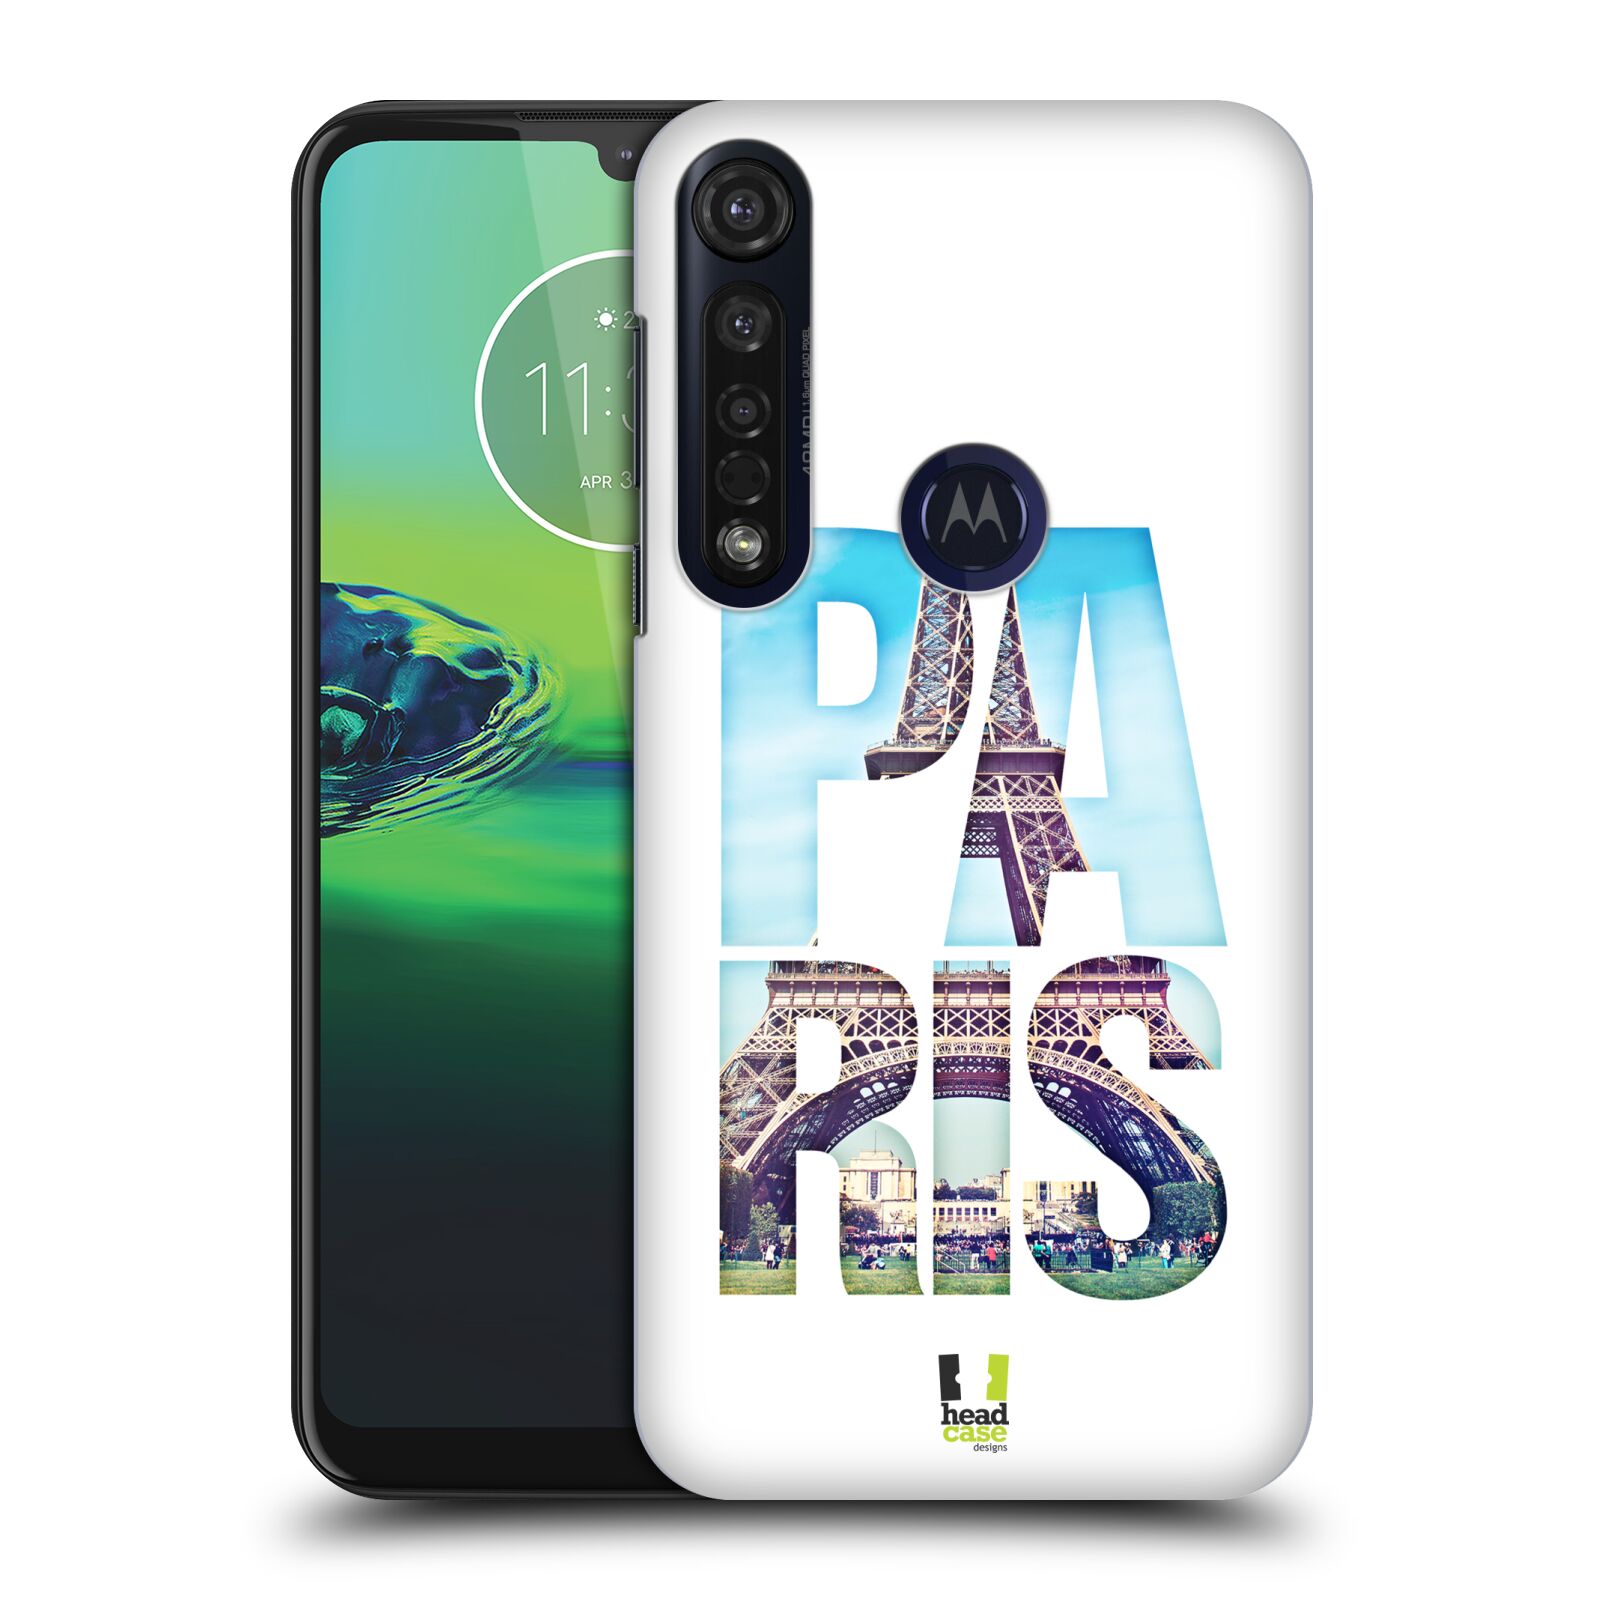 Pouzdro na mobil Motorola Moto G8 PLUS - HEAD CASE - vzor Města foto a nadpis FRANCIE, PAŘÍŽ, EIFFELOVA VĚŽ